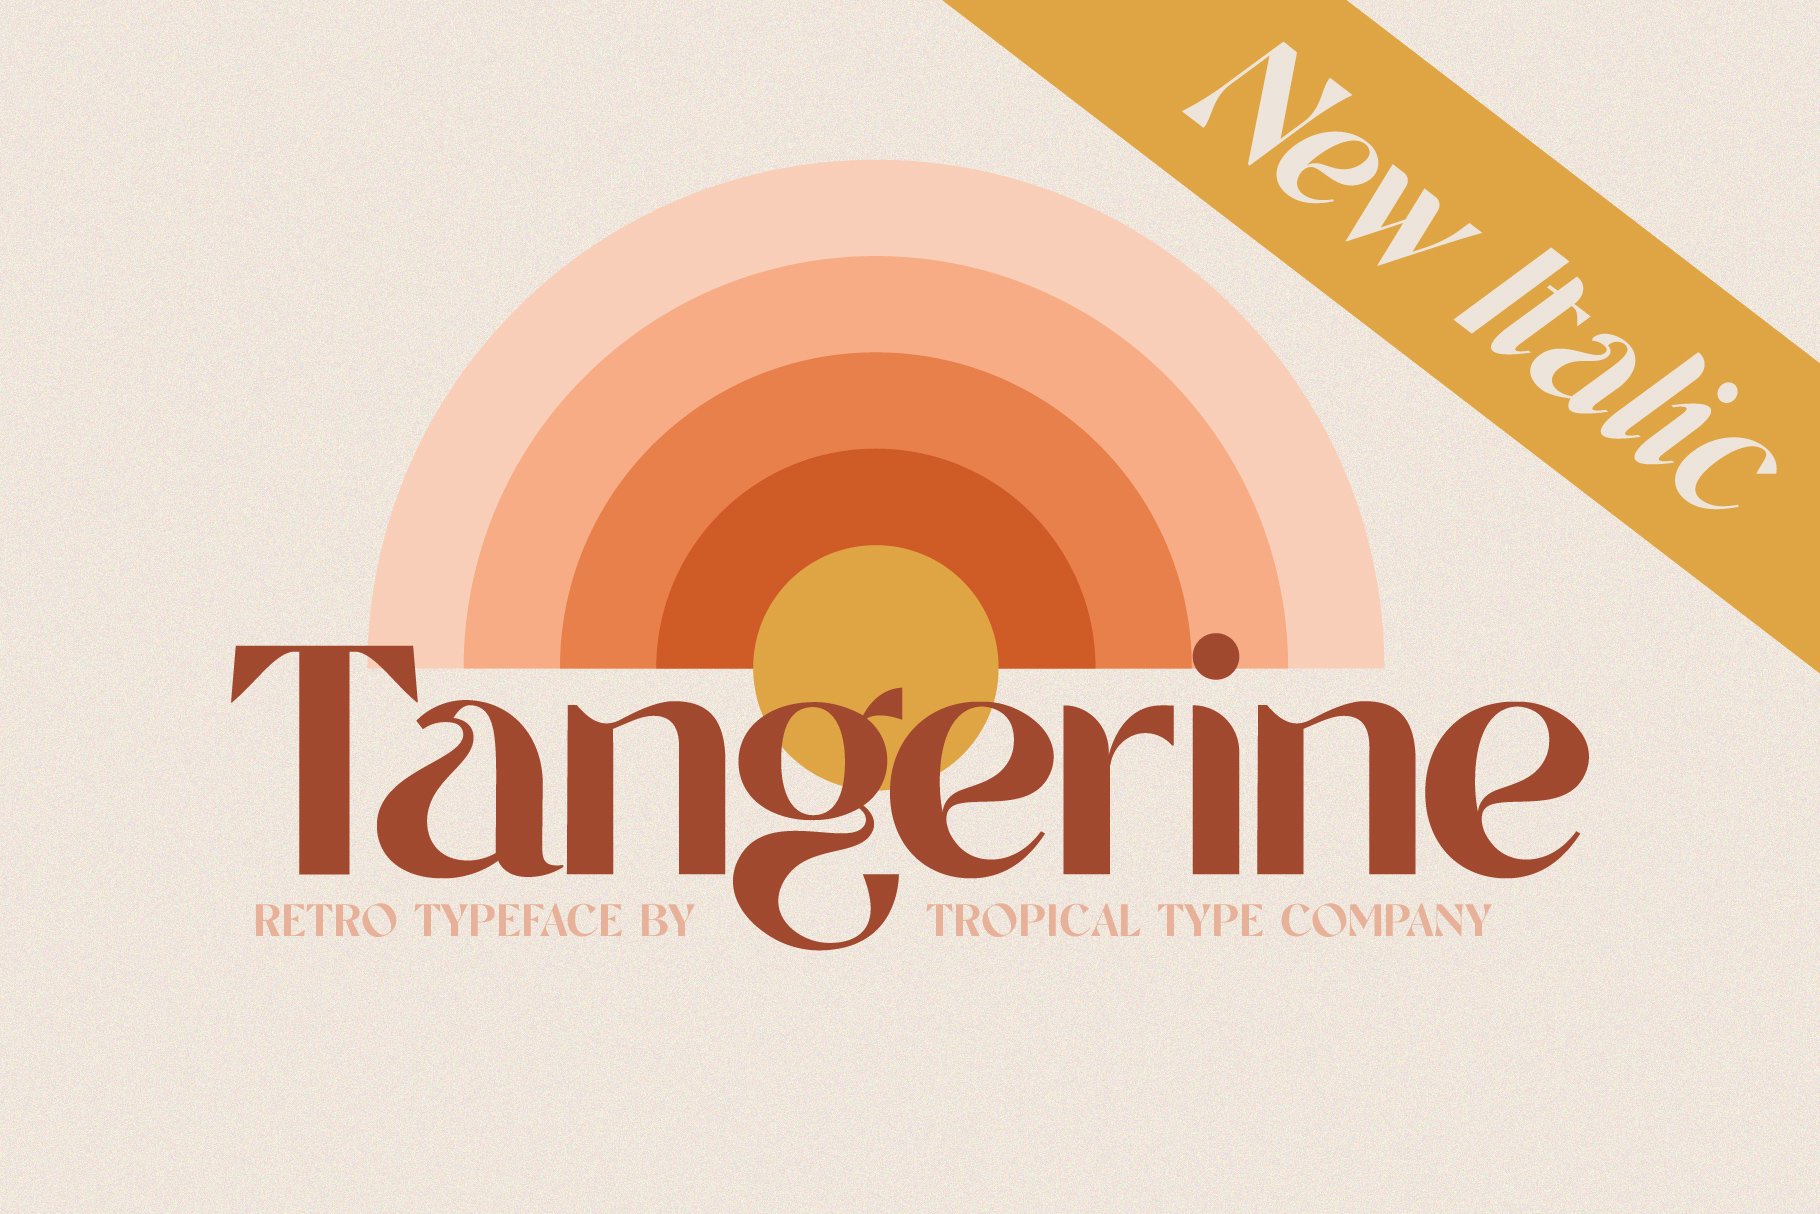 Tangerine - Retro Font cover image.